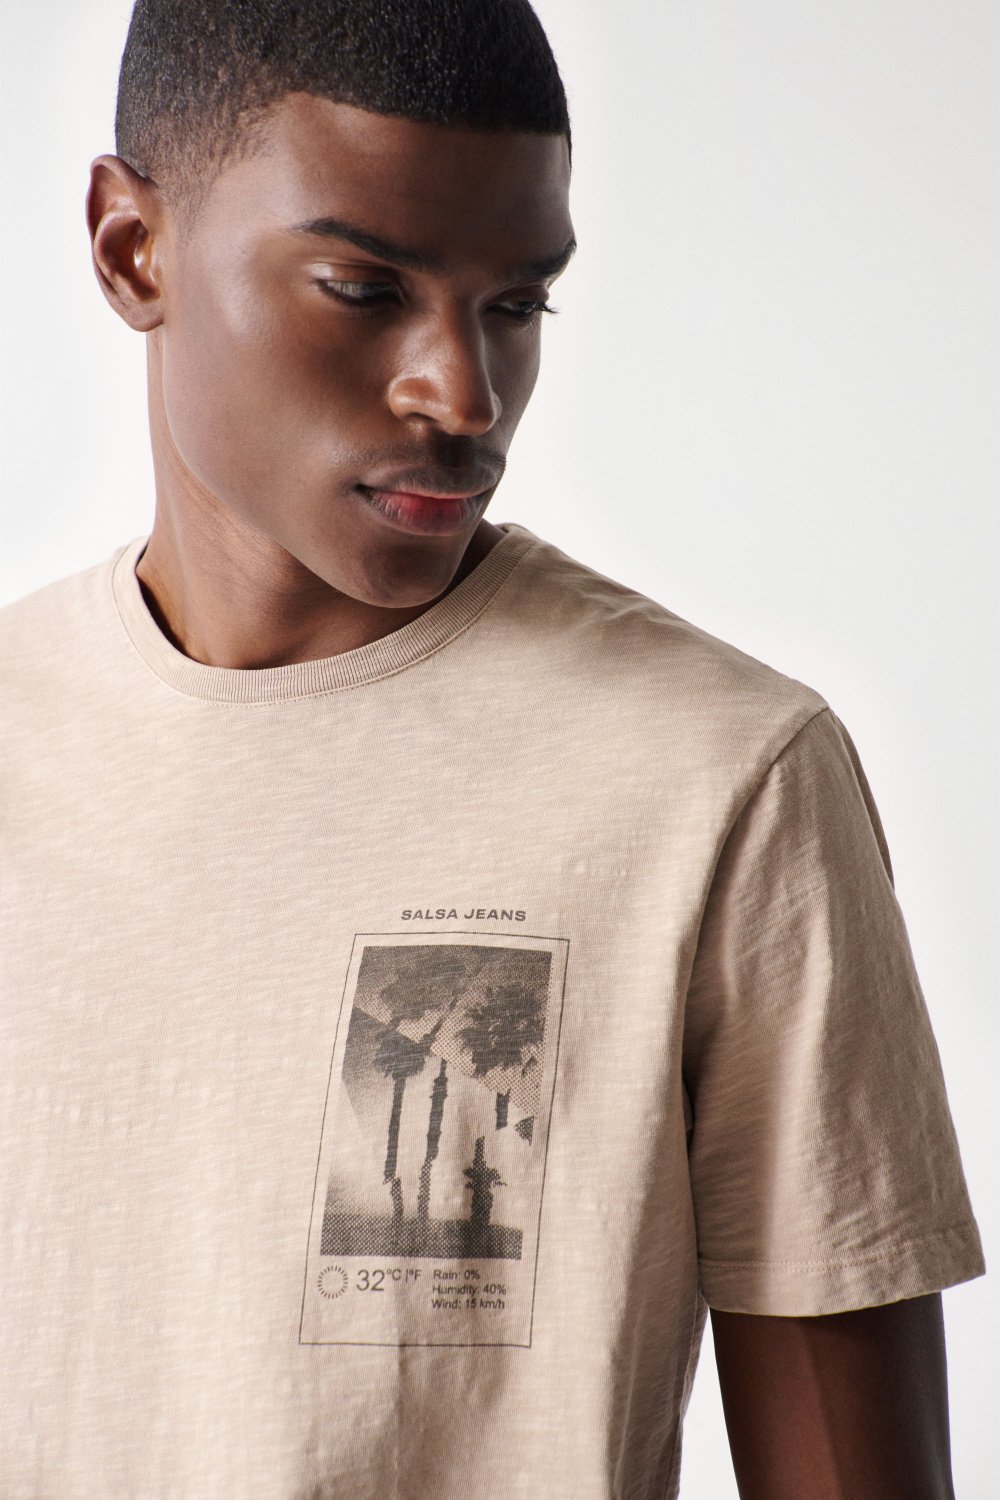 Beige t-shirt with print design - Salsa